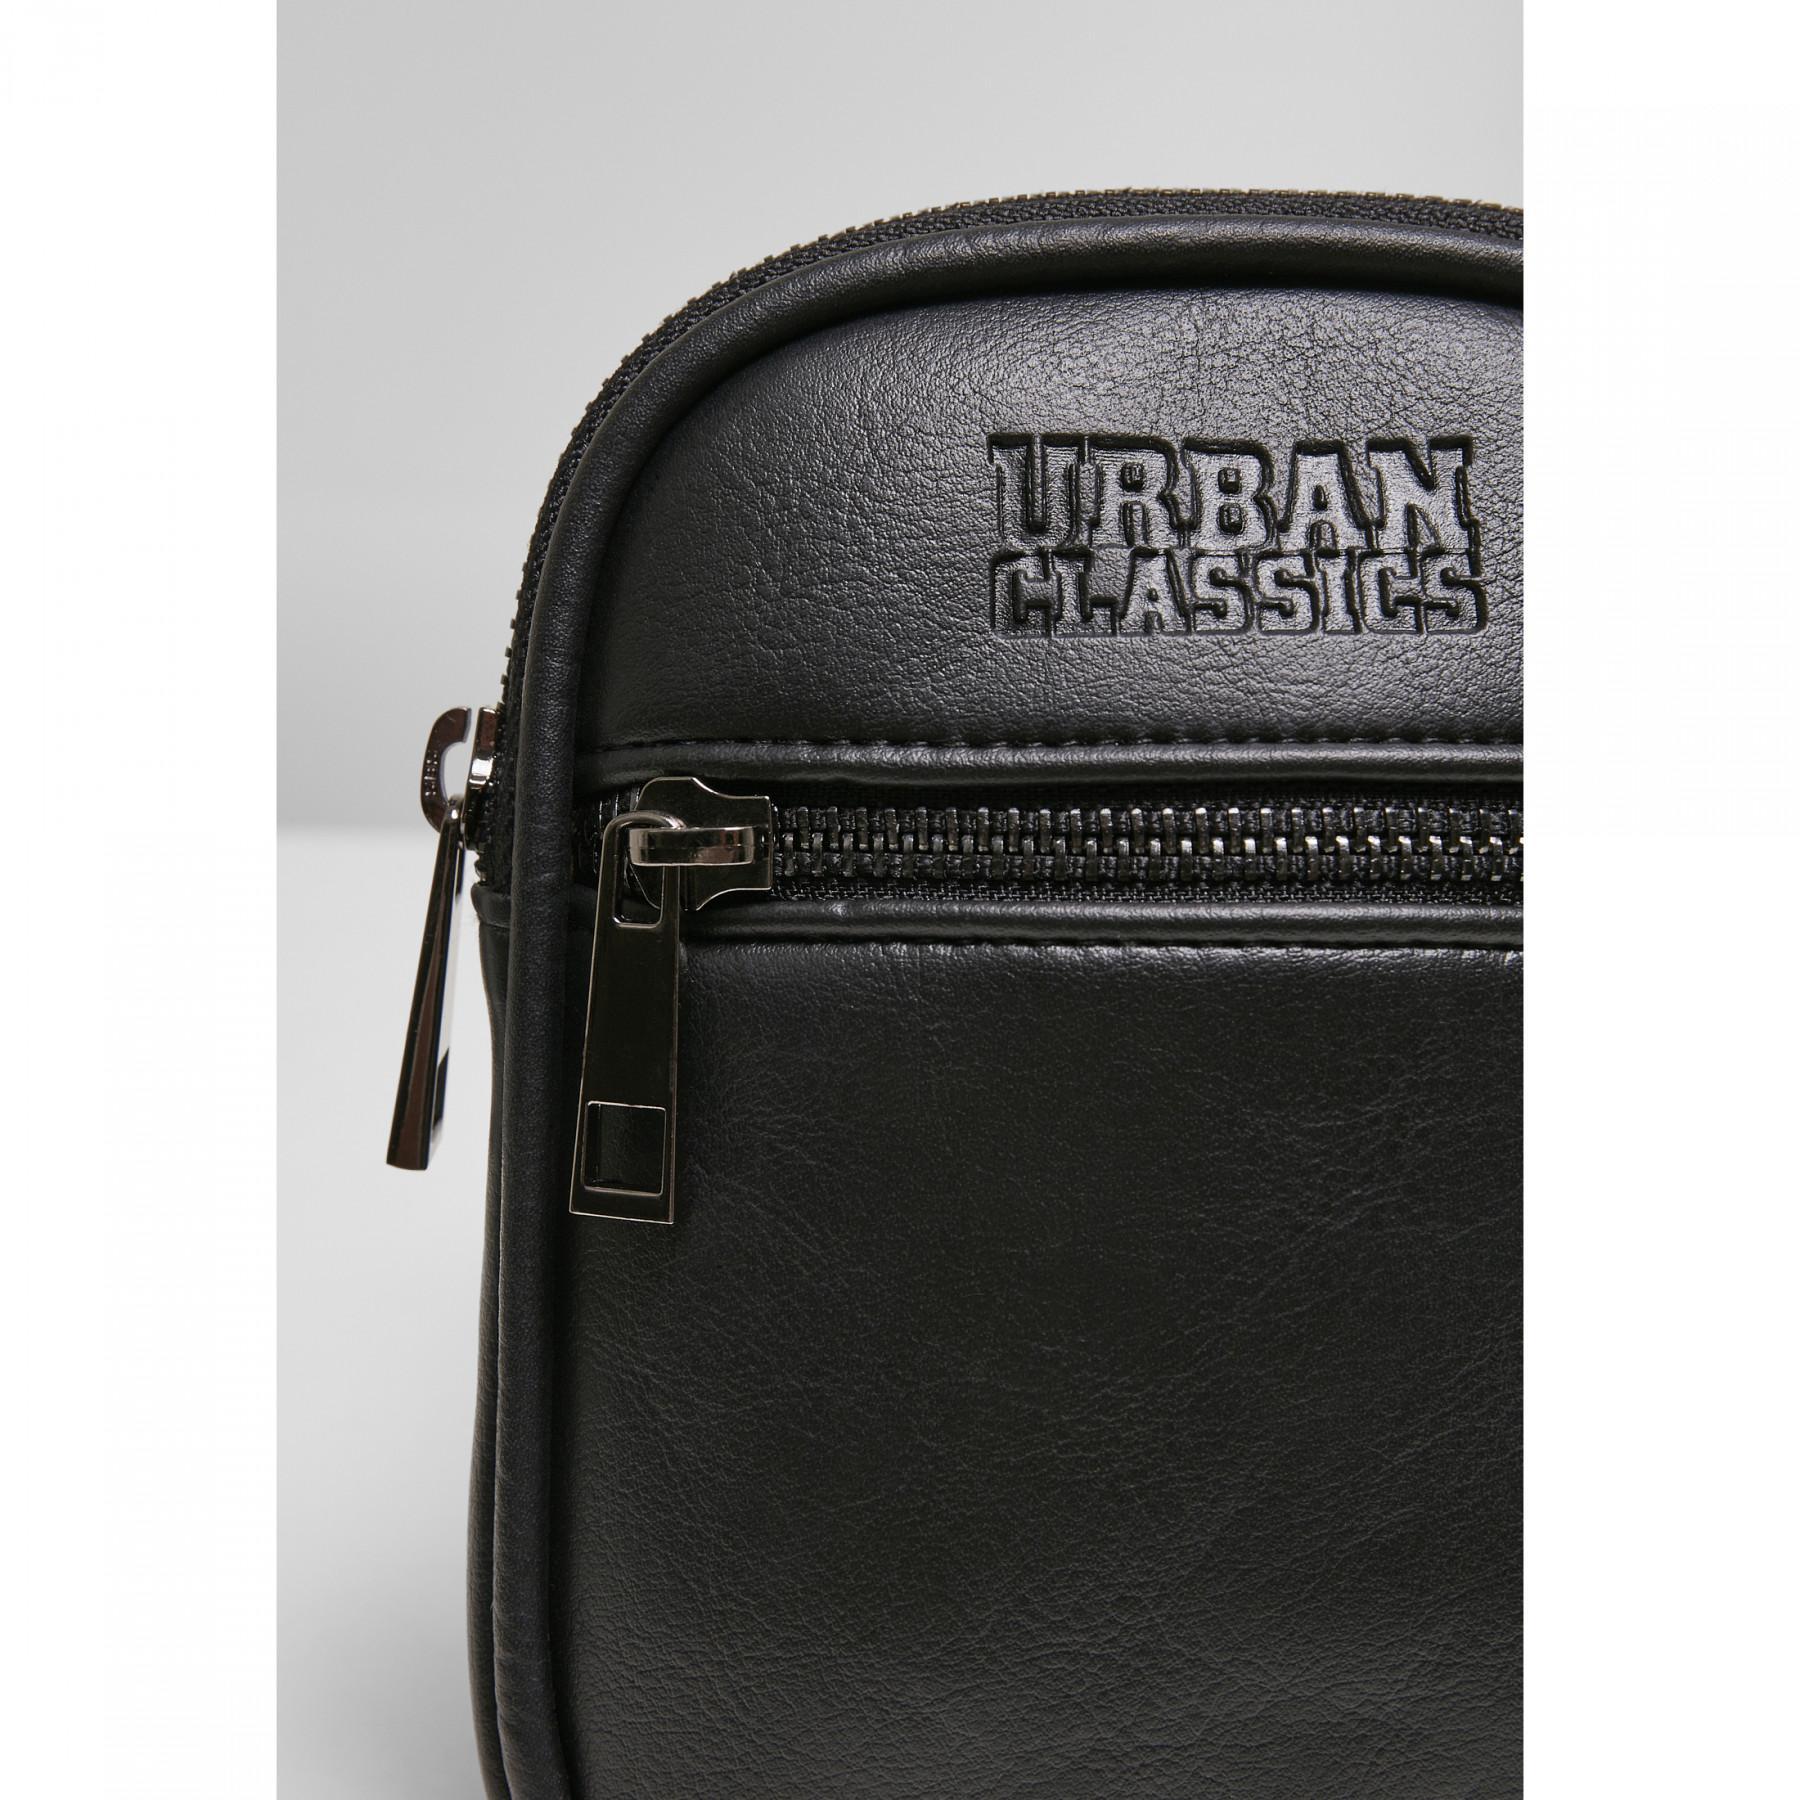 Väska Urban Classics imitation leather neckpouch